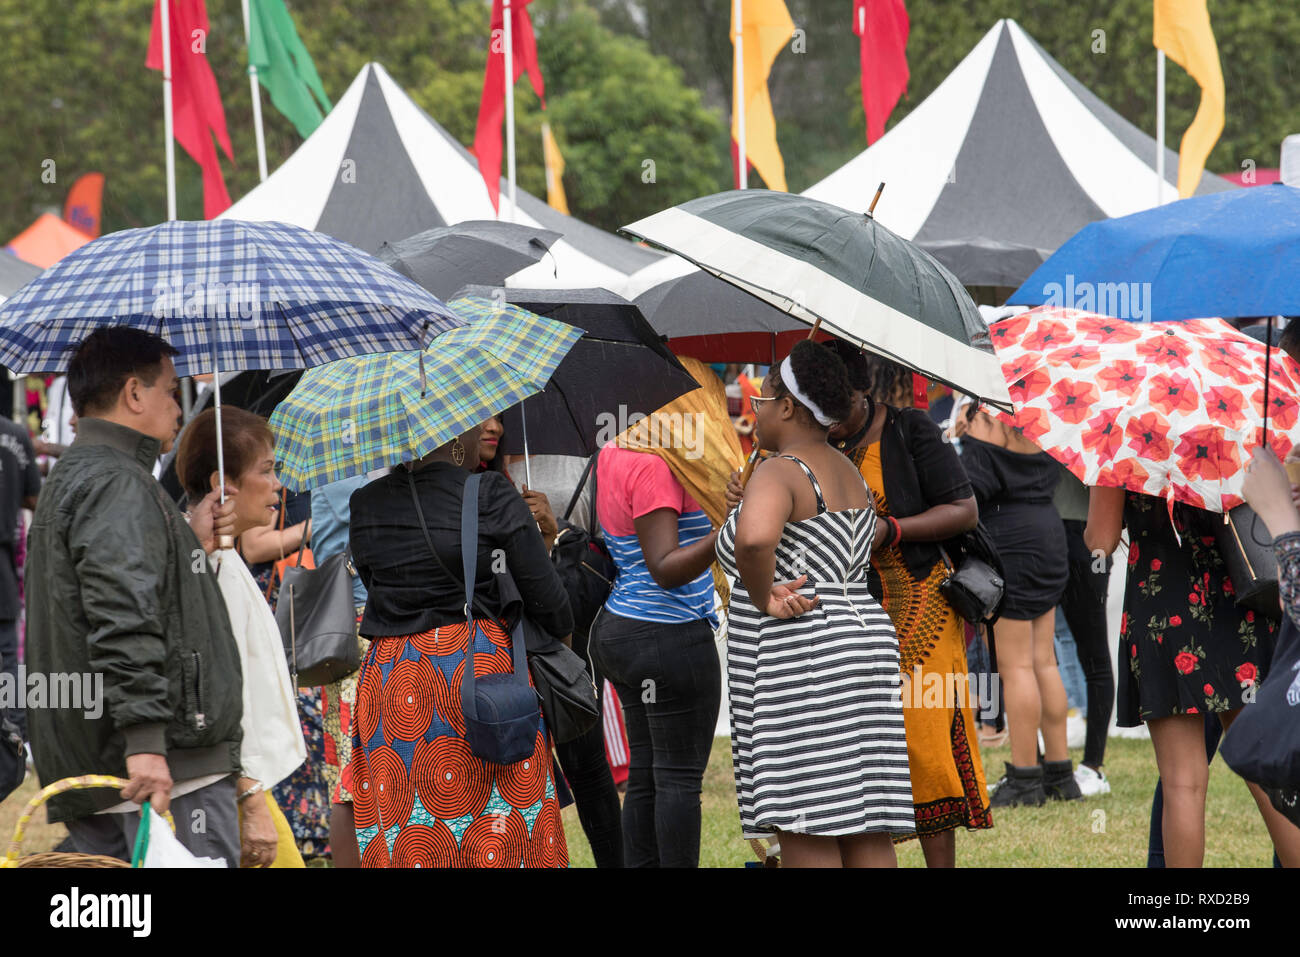 9 Mar 2019, multikulturellen Australien war heute am Africultures Festival in Wyatt Park, Lidcombe, Sydney Australien statt. Stockfoto